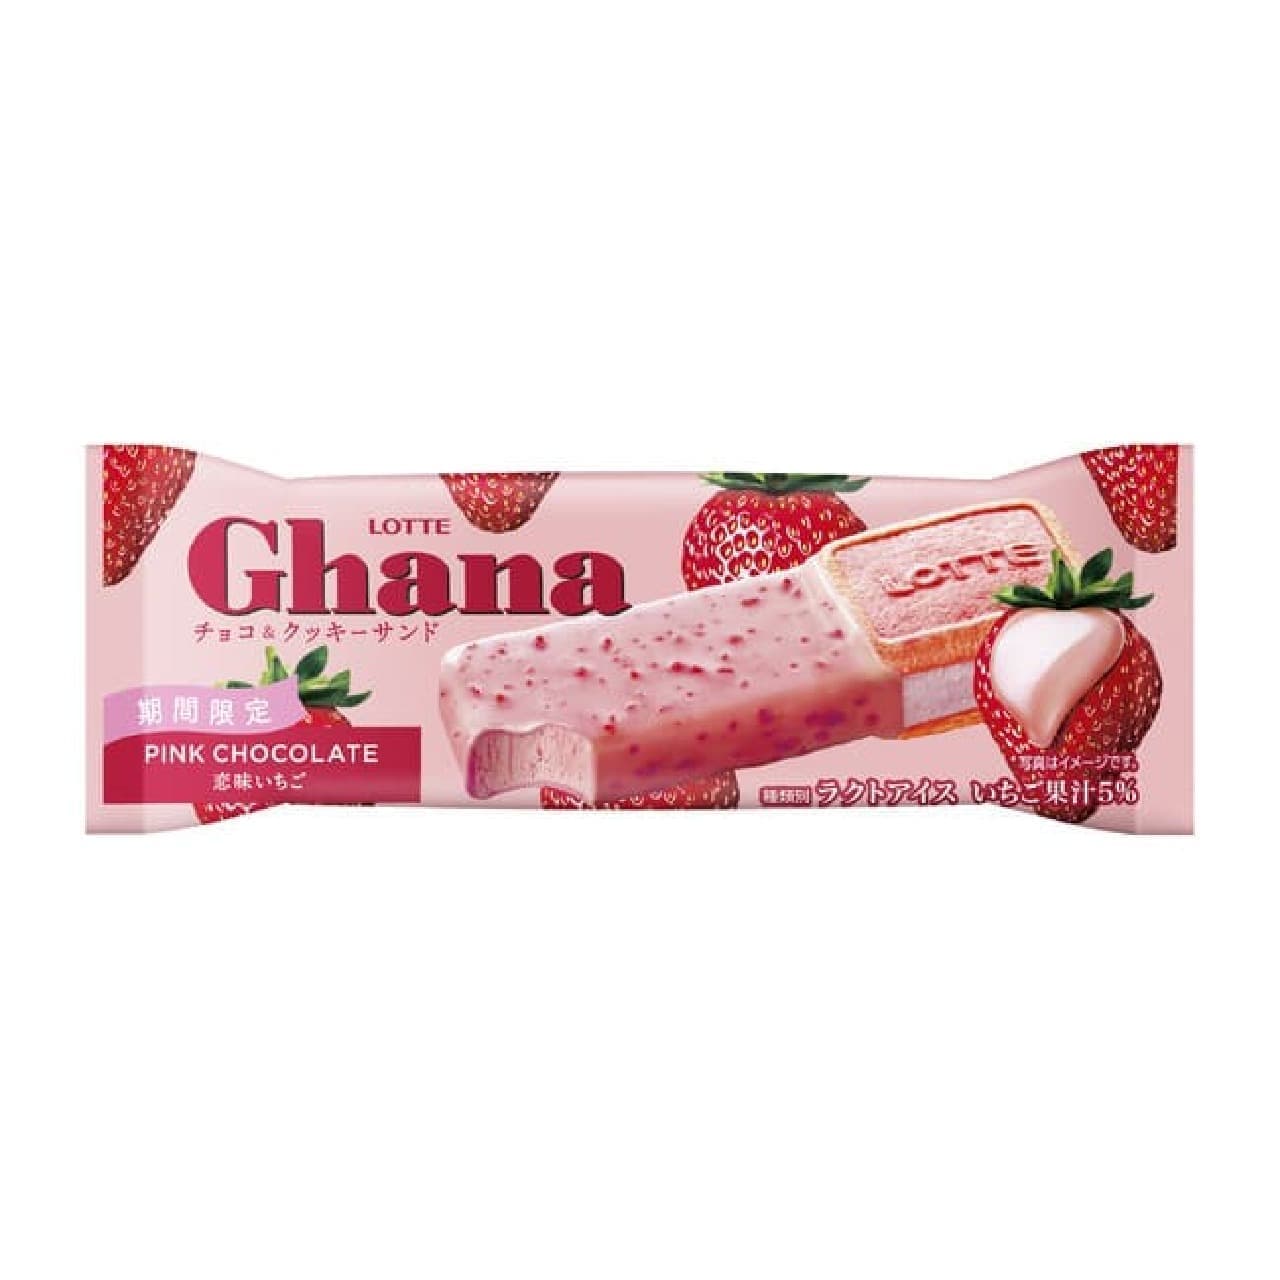 Ghana Chocolate & Cookie Sandwich Love Strawberries